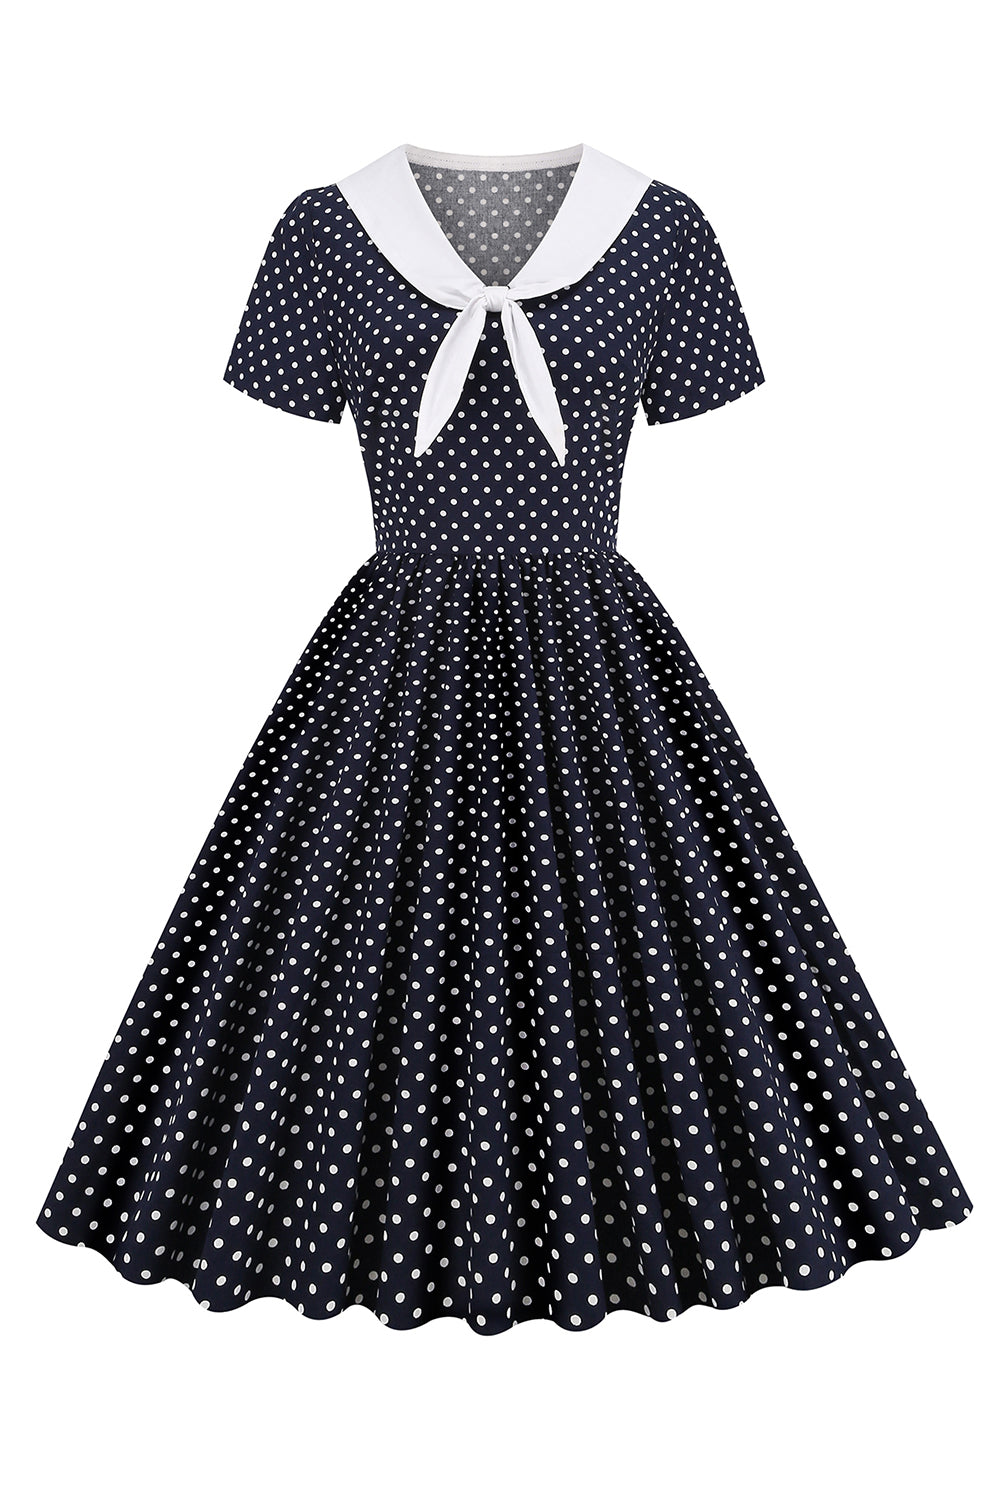 Preto e branco Polka Dots Vintage 1950s Vestido com Bowknot